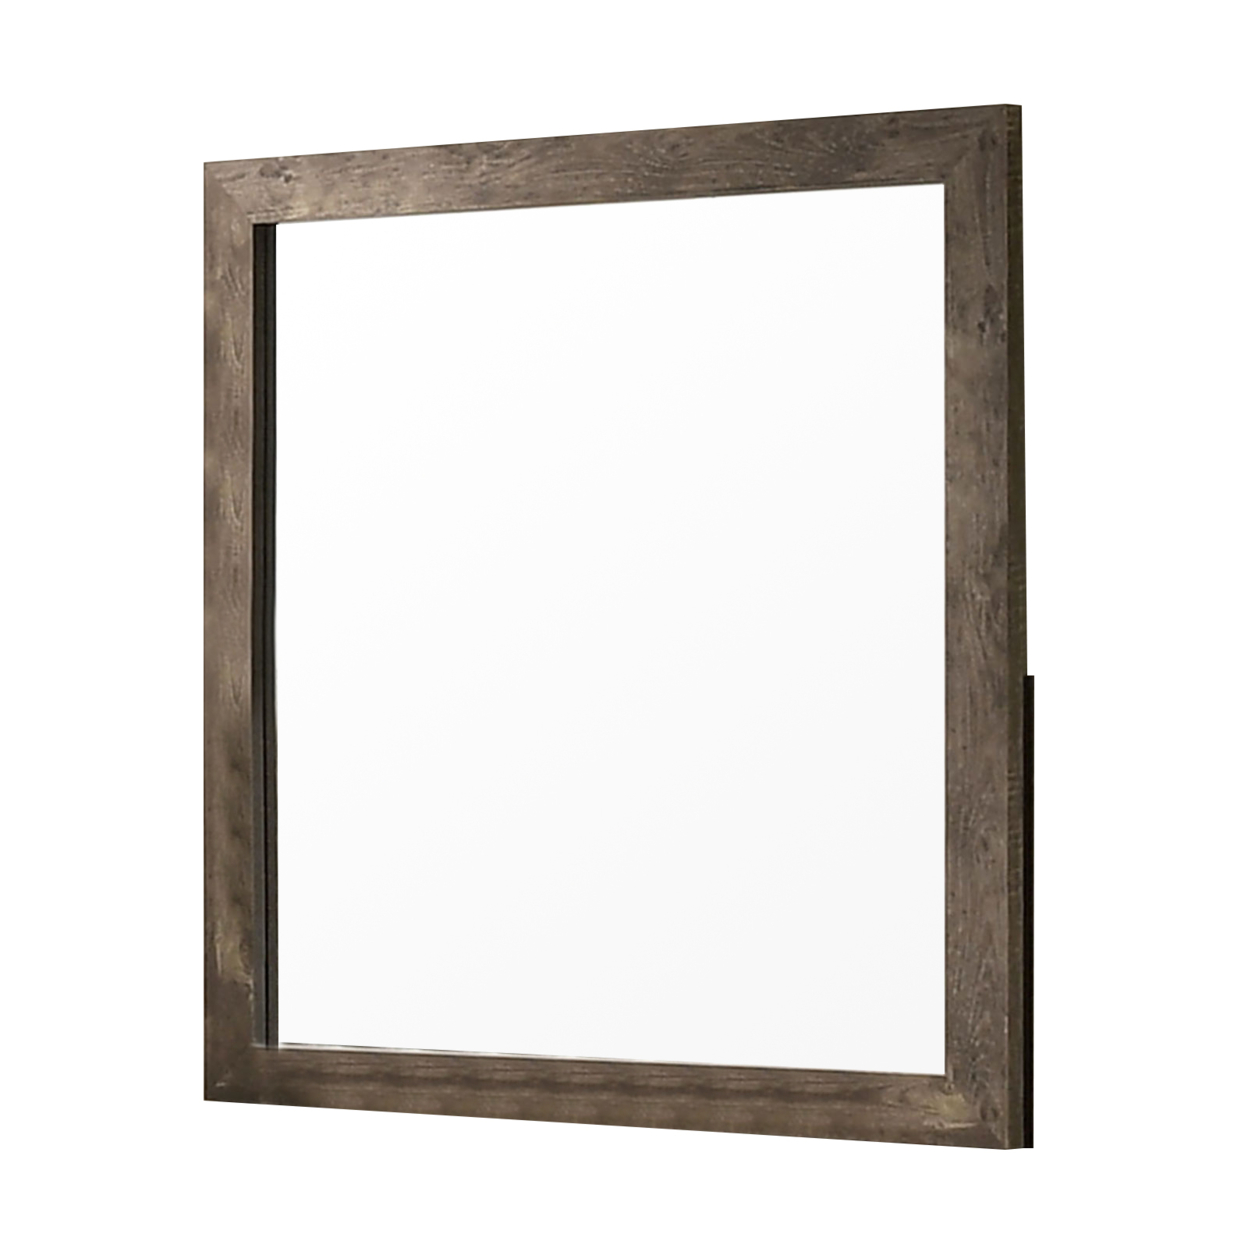 Farmhouse Style Square Wooden Frame Mirror With Grain Details, Brown- Saltoro Sherpi